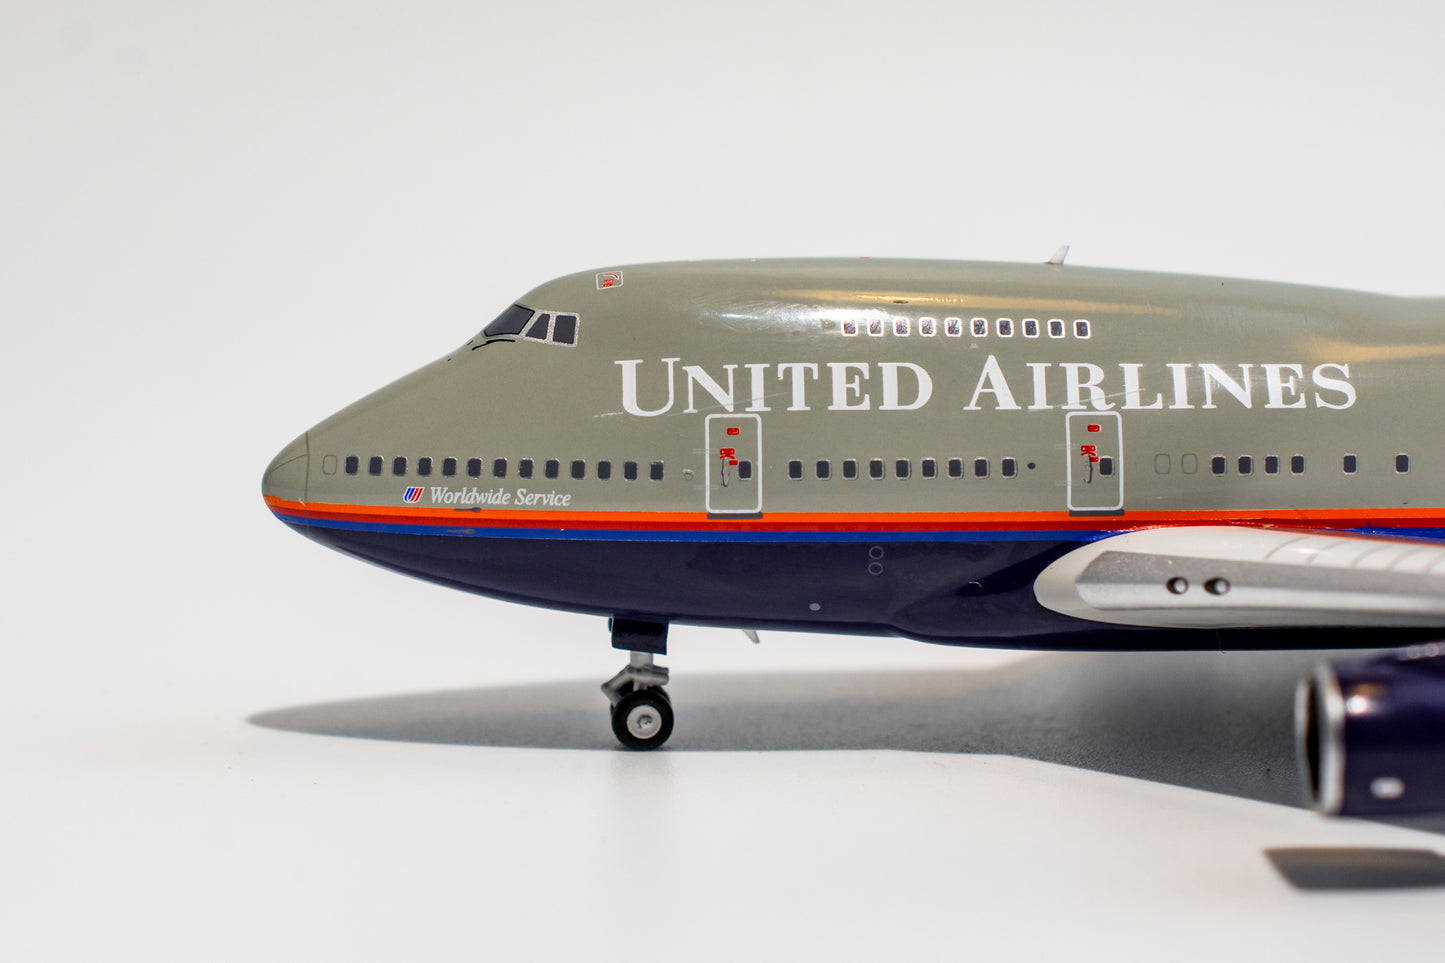 1:400 NG Models United Airlines Boeing 747SP "Battleship Grey" N145UA NG07008